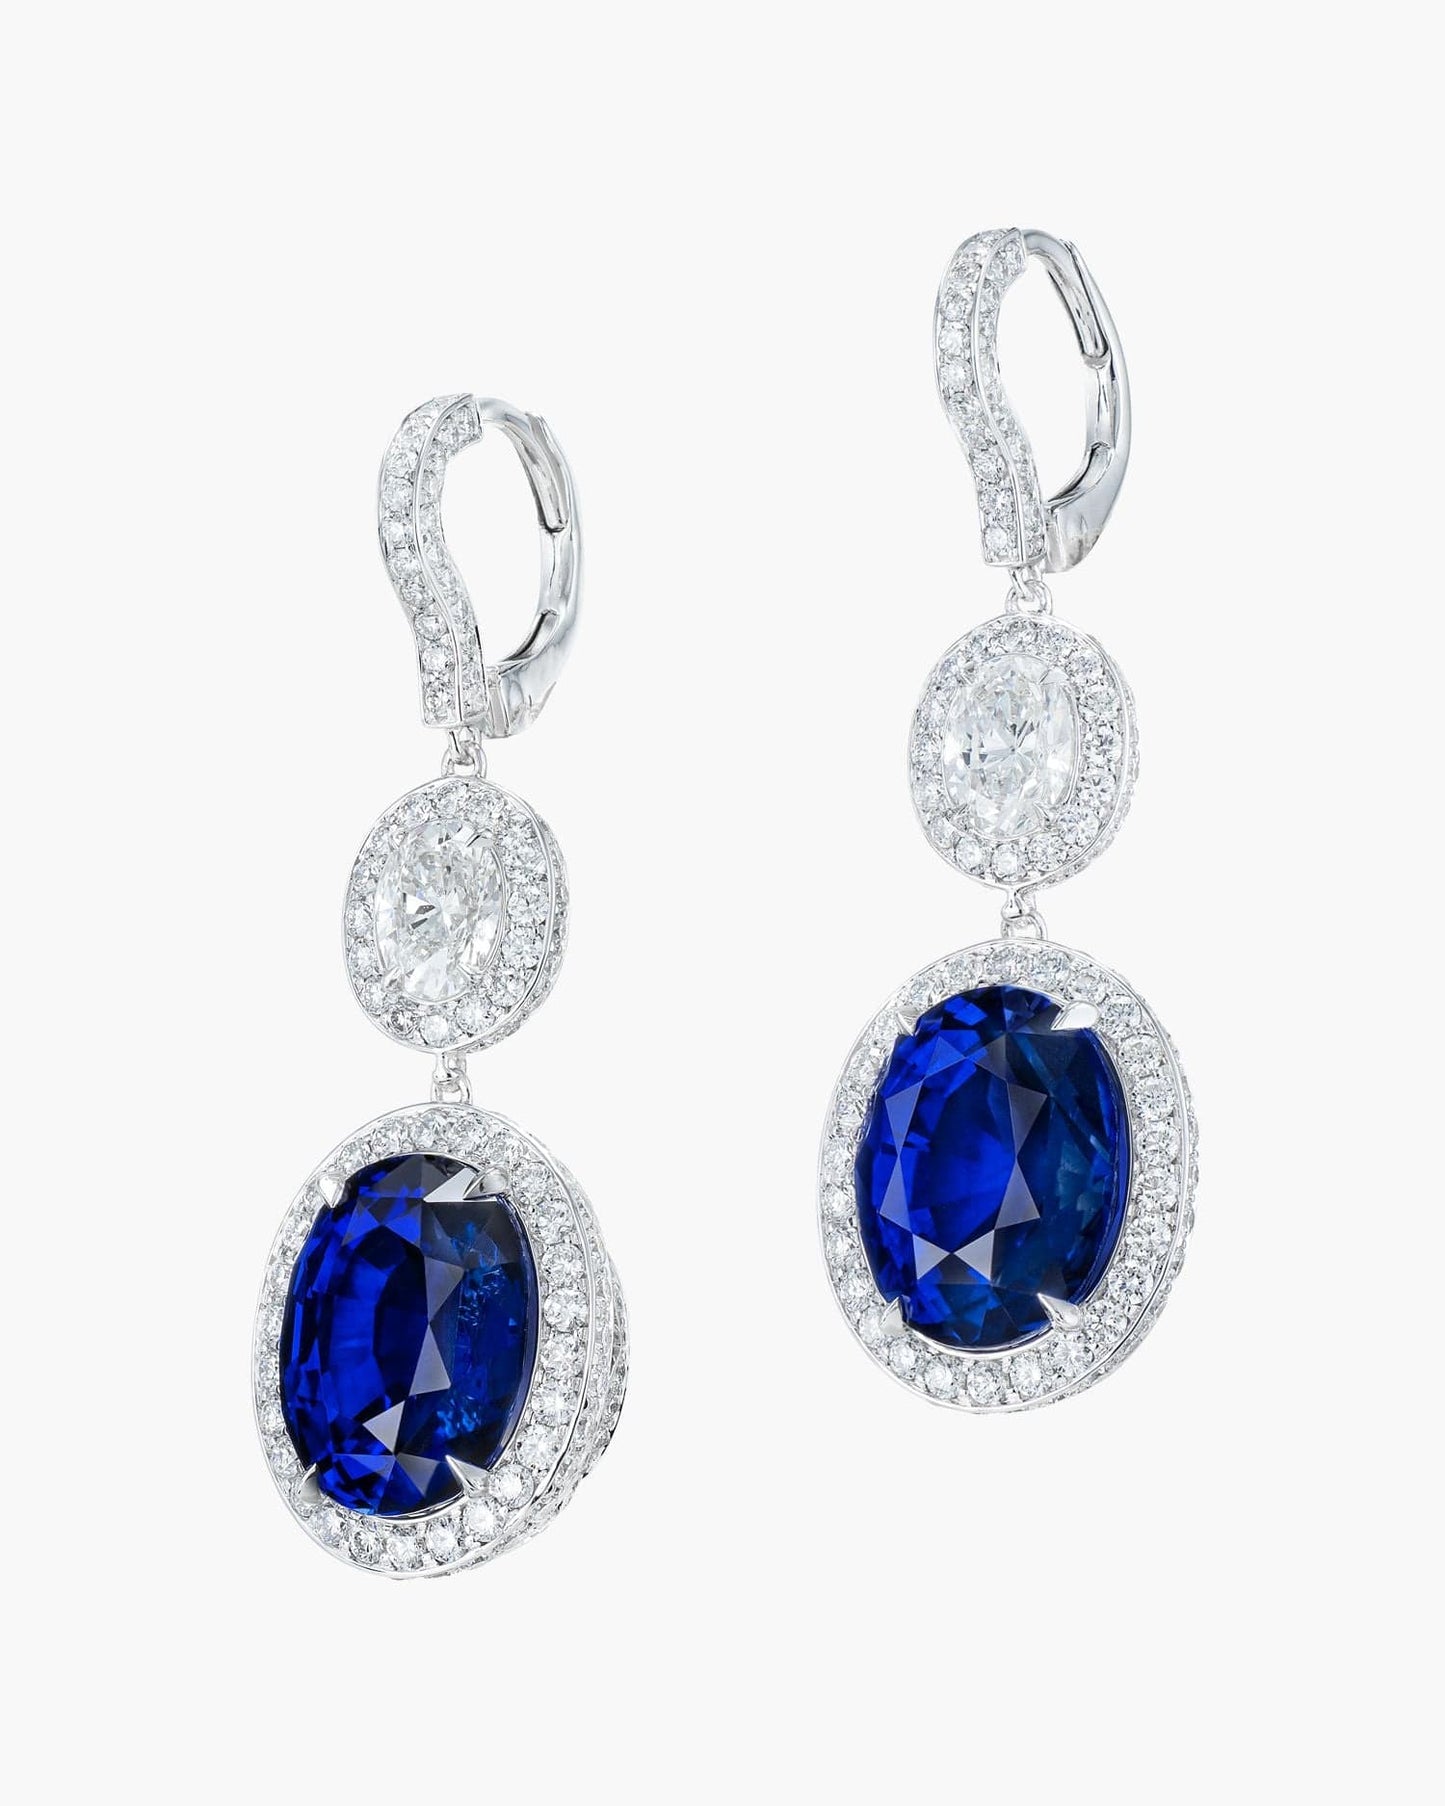 12.05 carat Oval Shape Ceylon Sapphire and Diamond Earrings